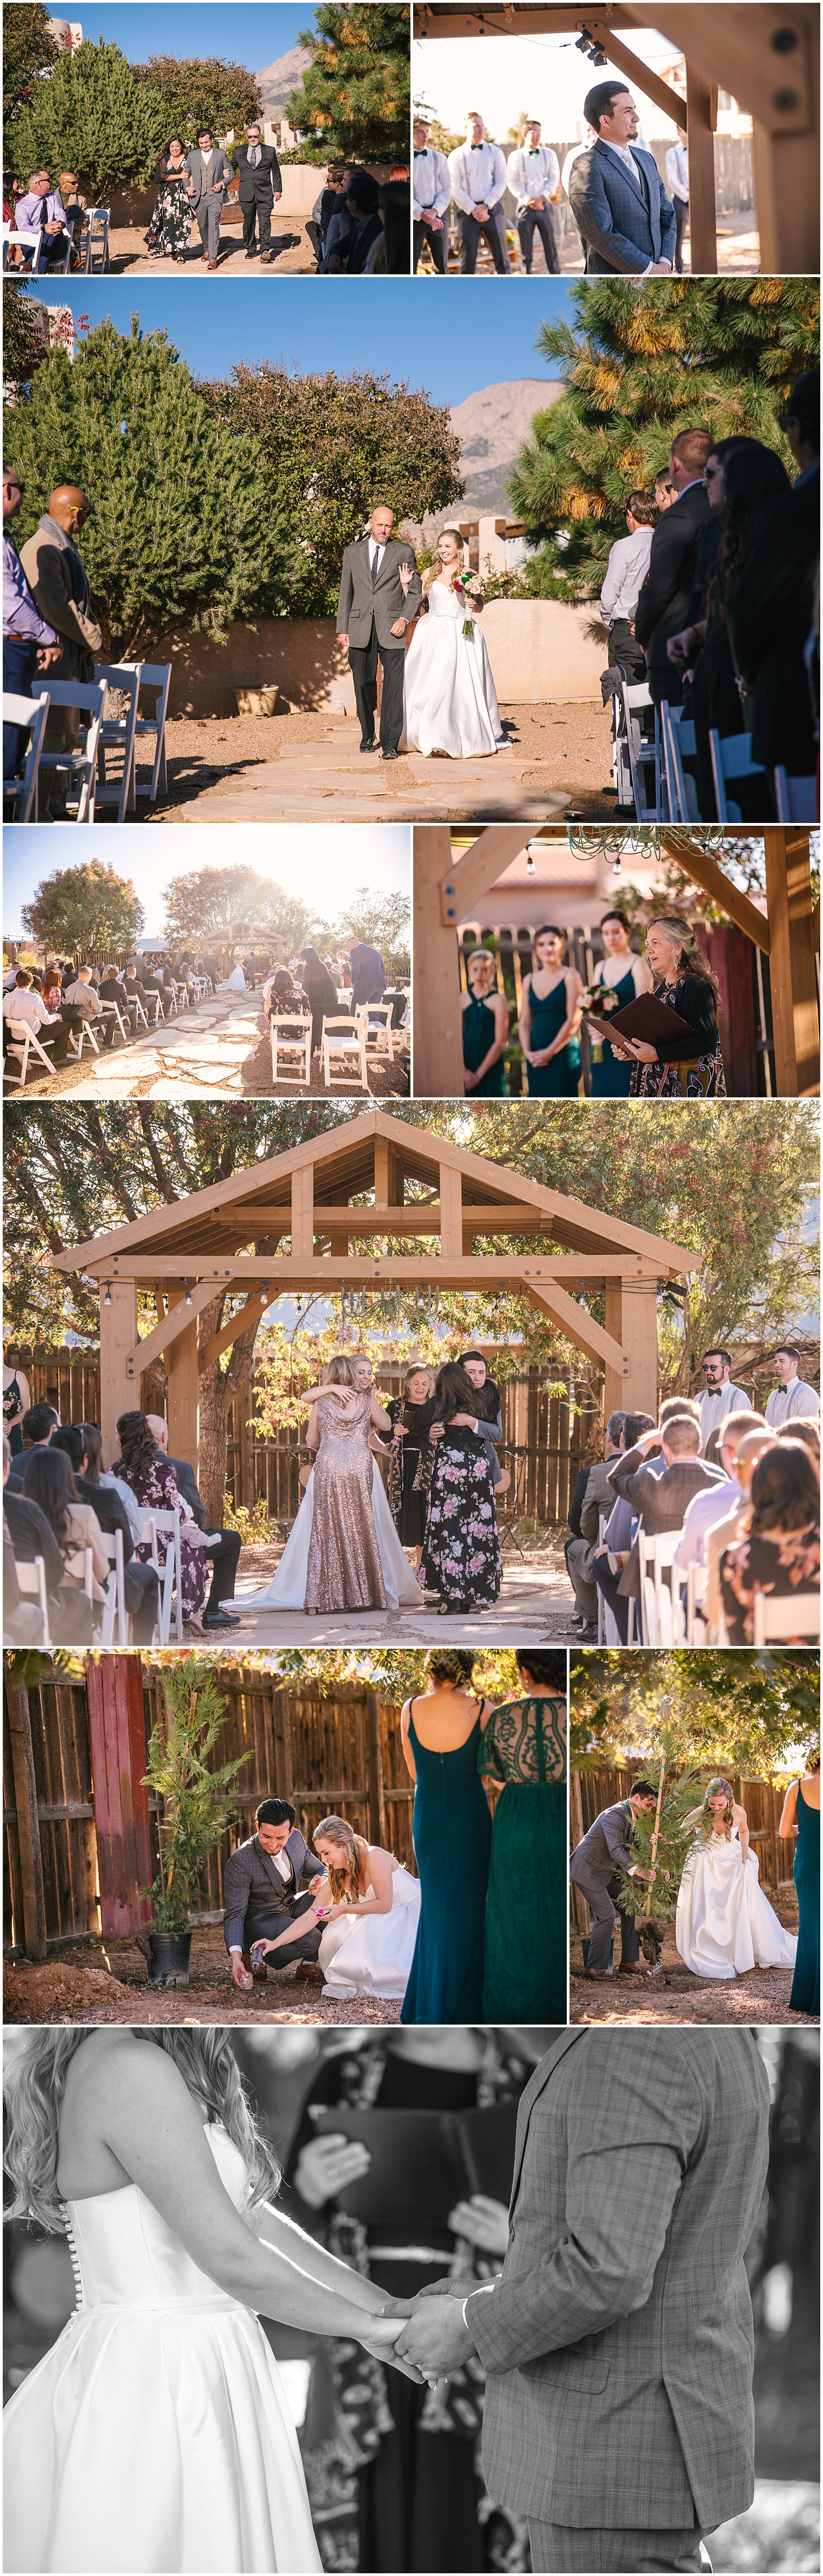 Backyard wedding ceremony in northeast Albuquerque Acres New Mexico